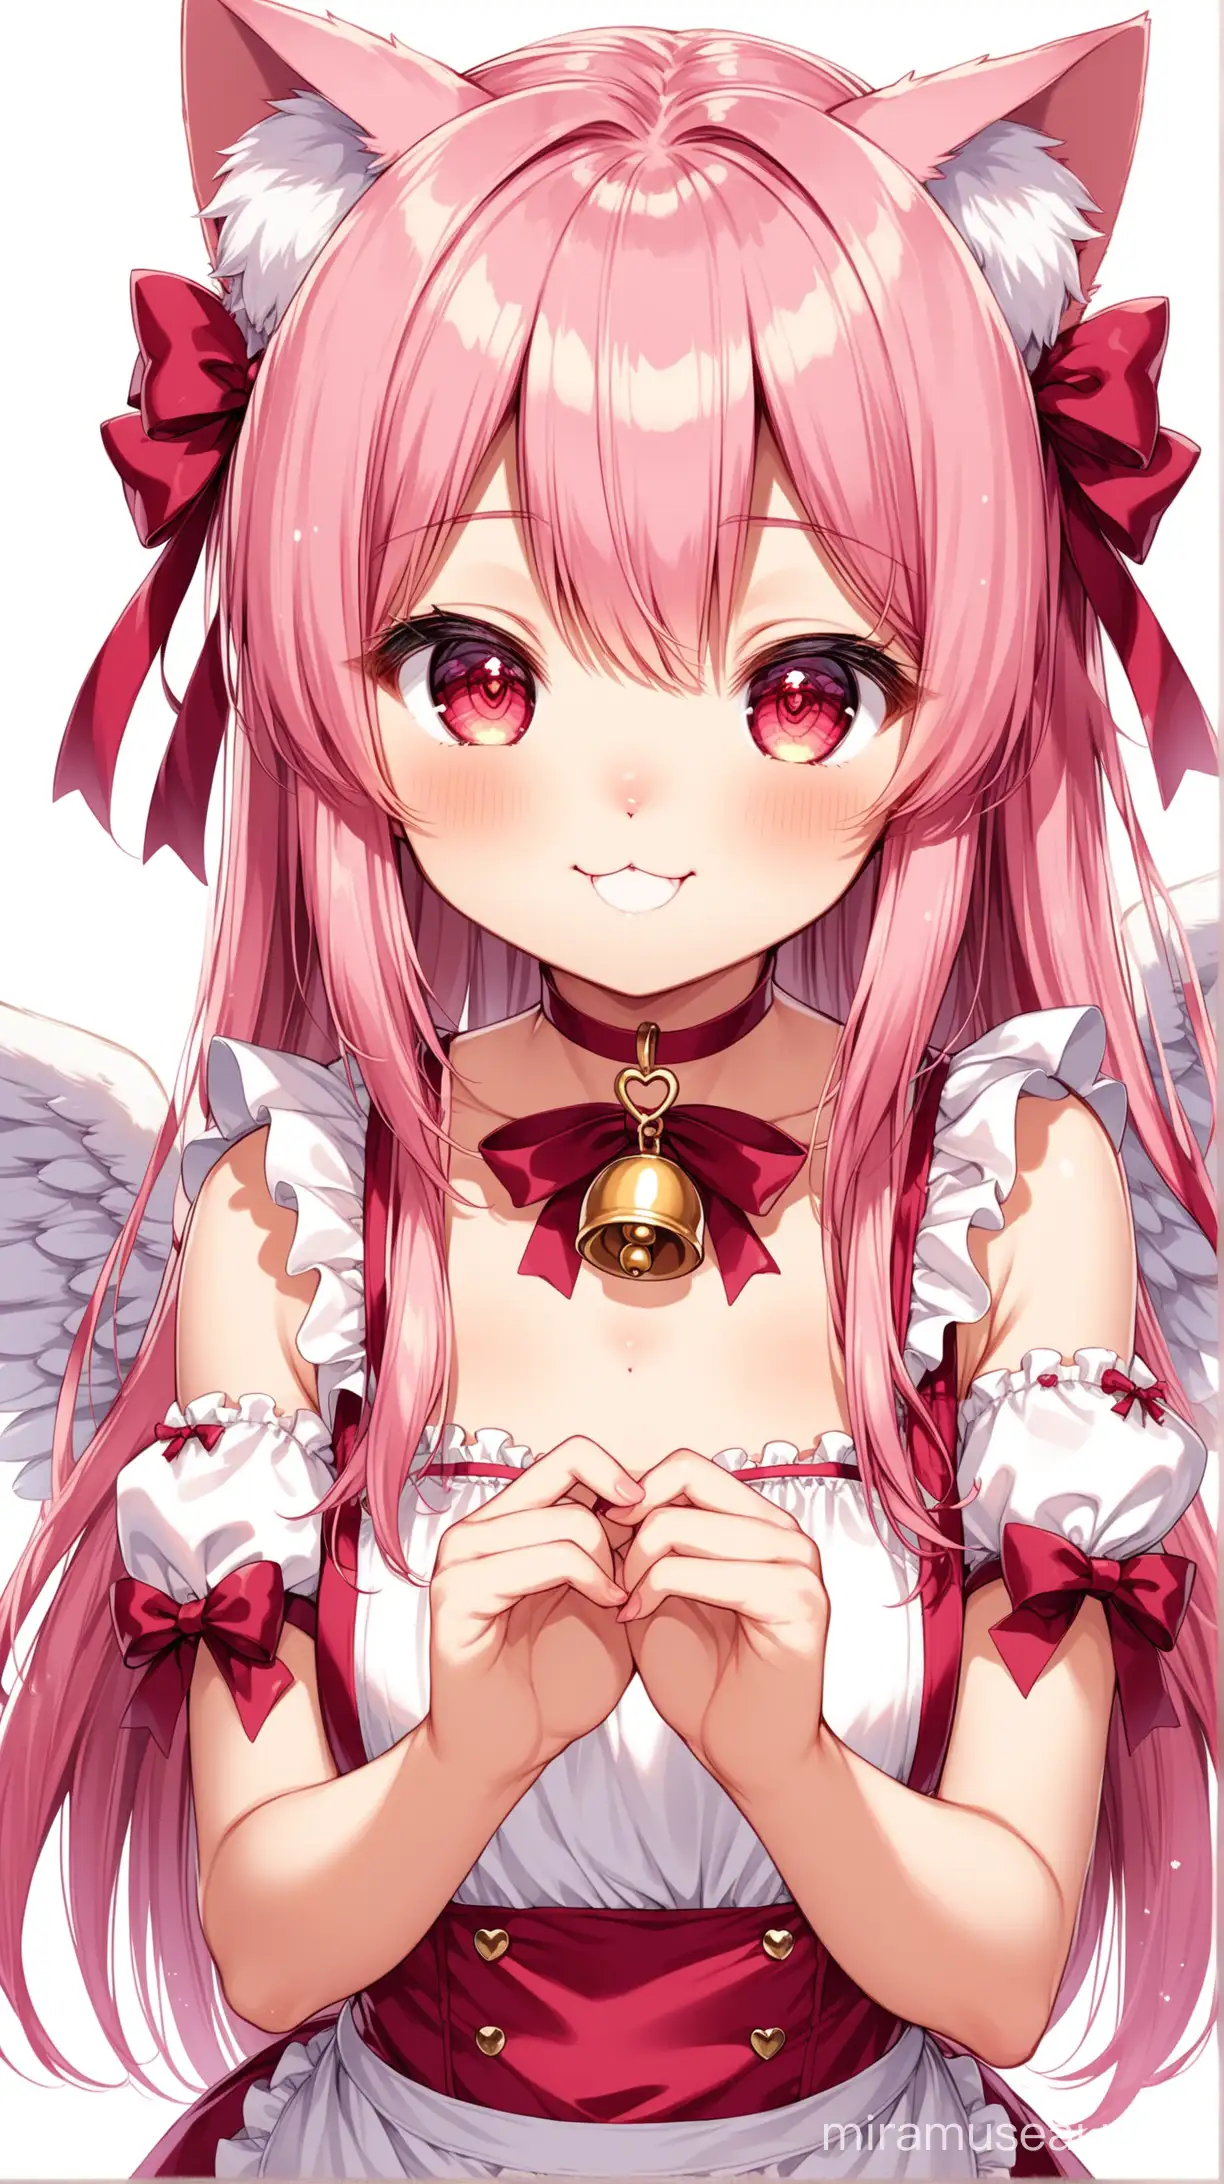 Kawaii Cat Girl in Pink Maid Uniform with Angelic Companion